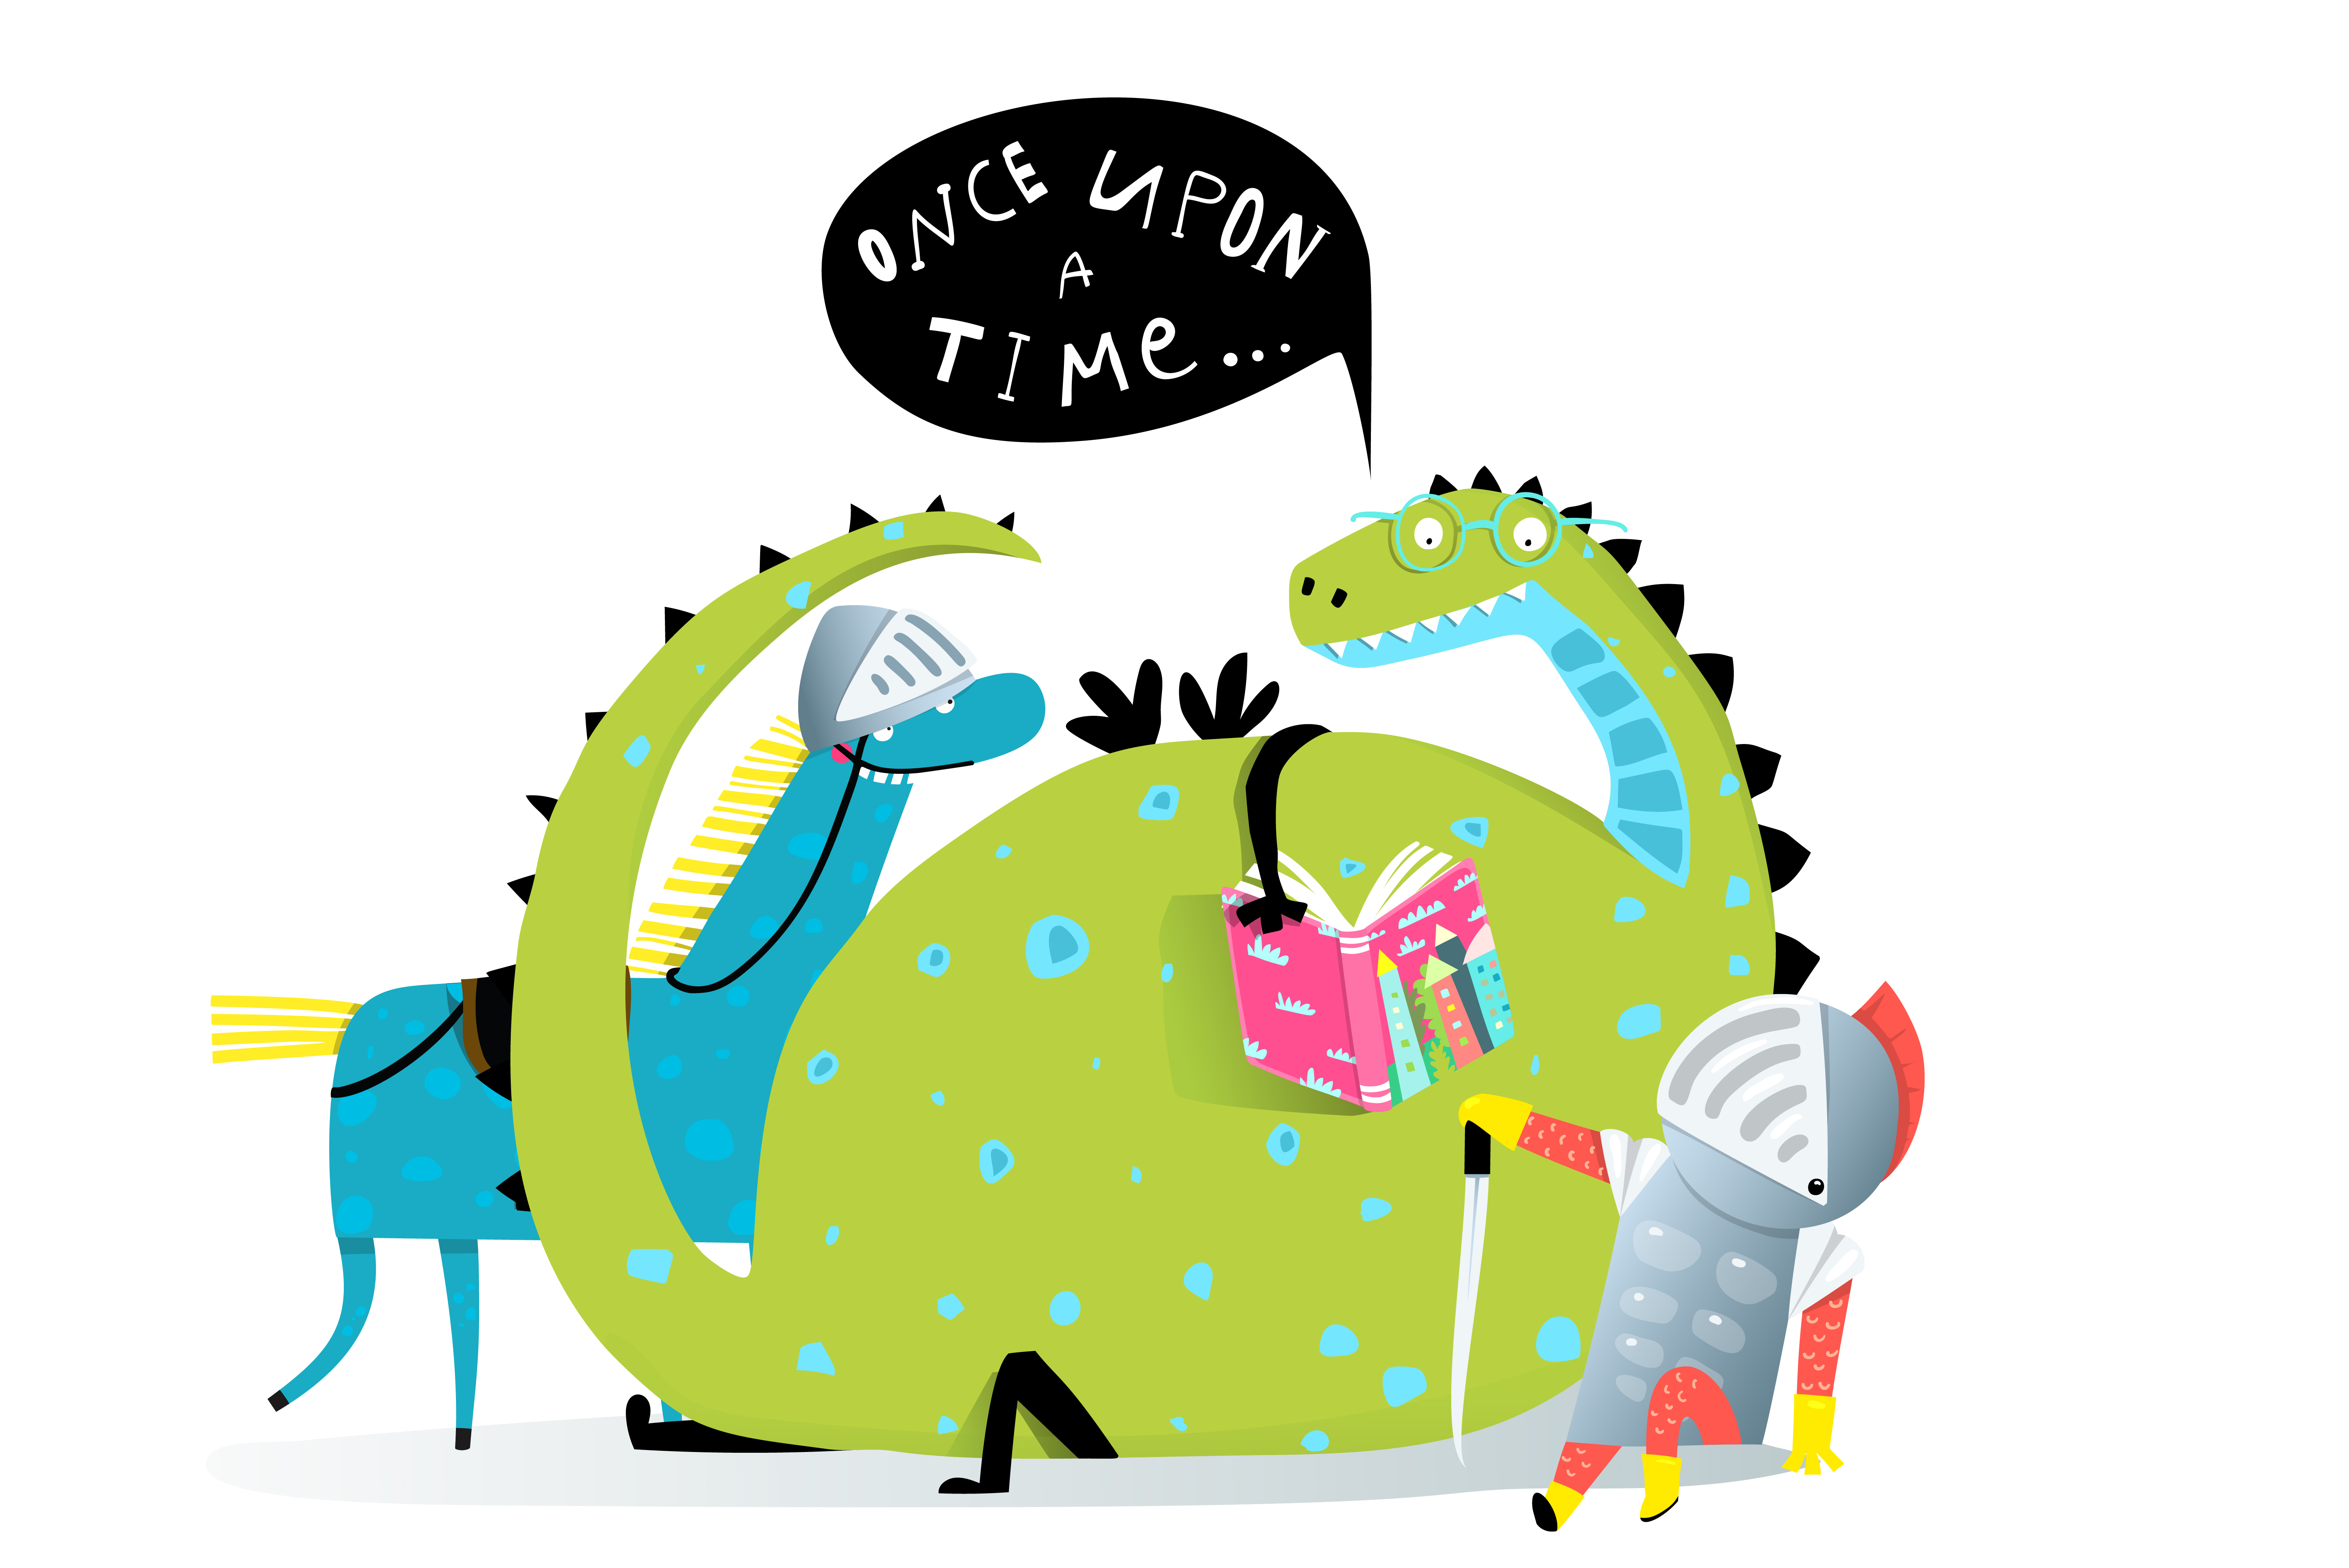 Cartoon dragon reading aloud: "Once upon a Time"